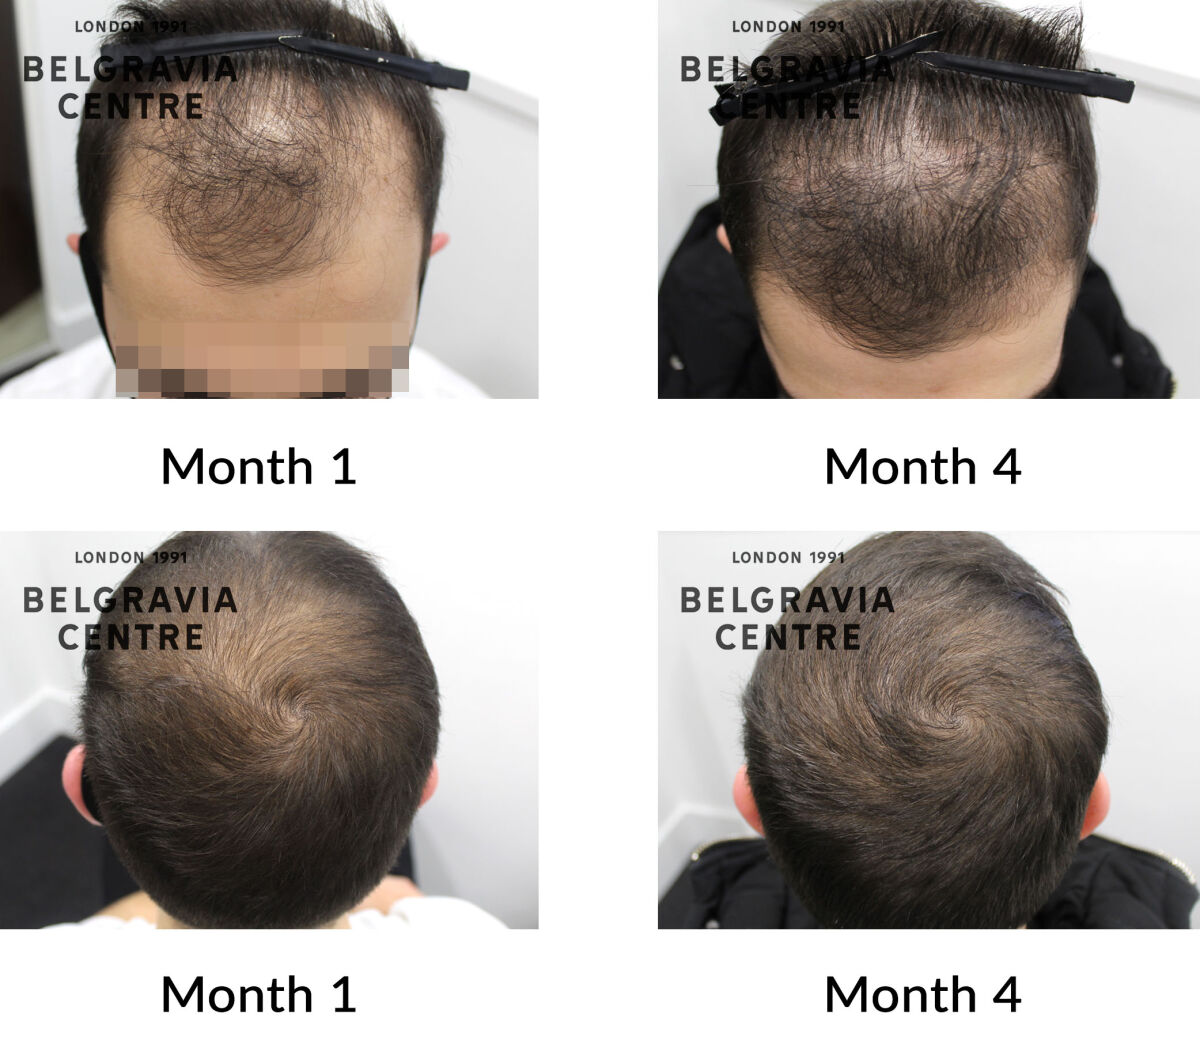 male pattern hair loss the belgravia centre 433423